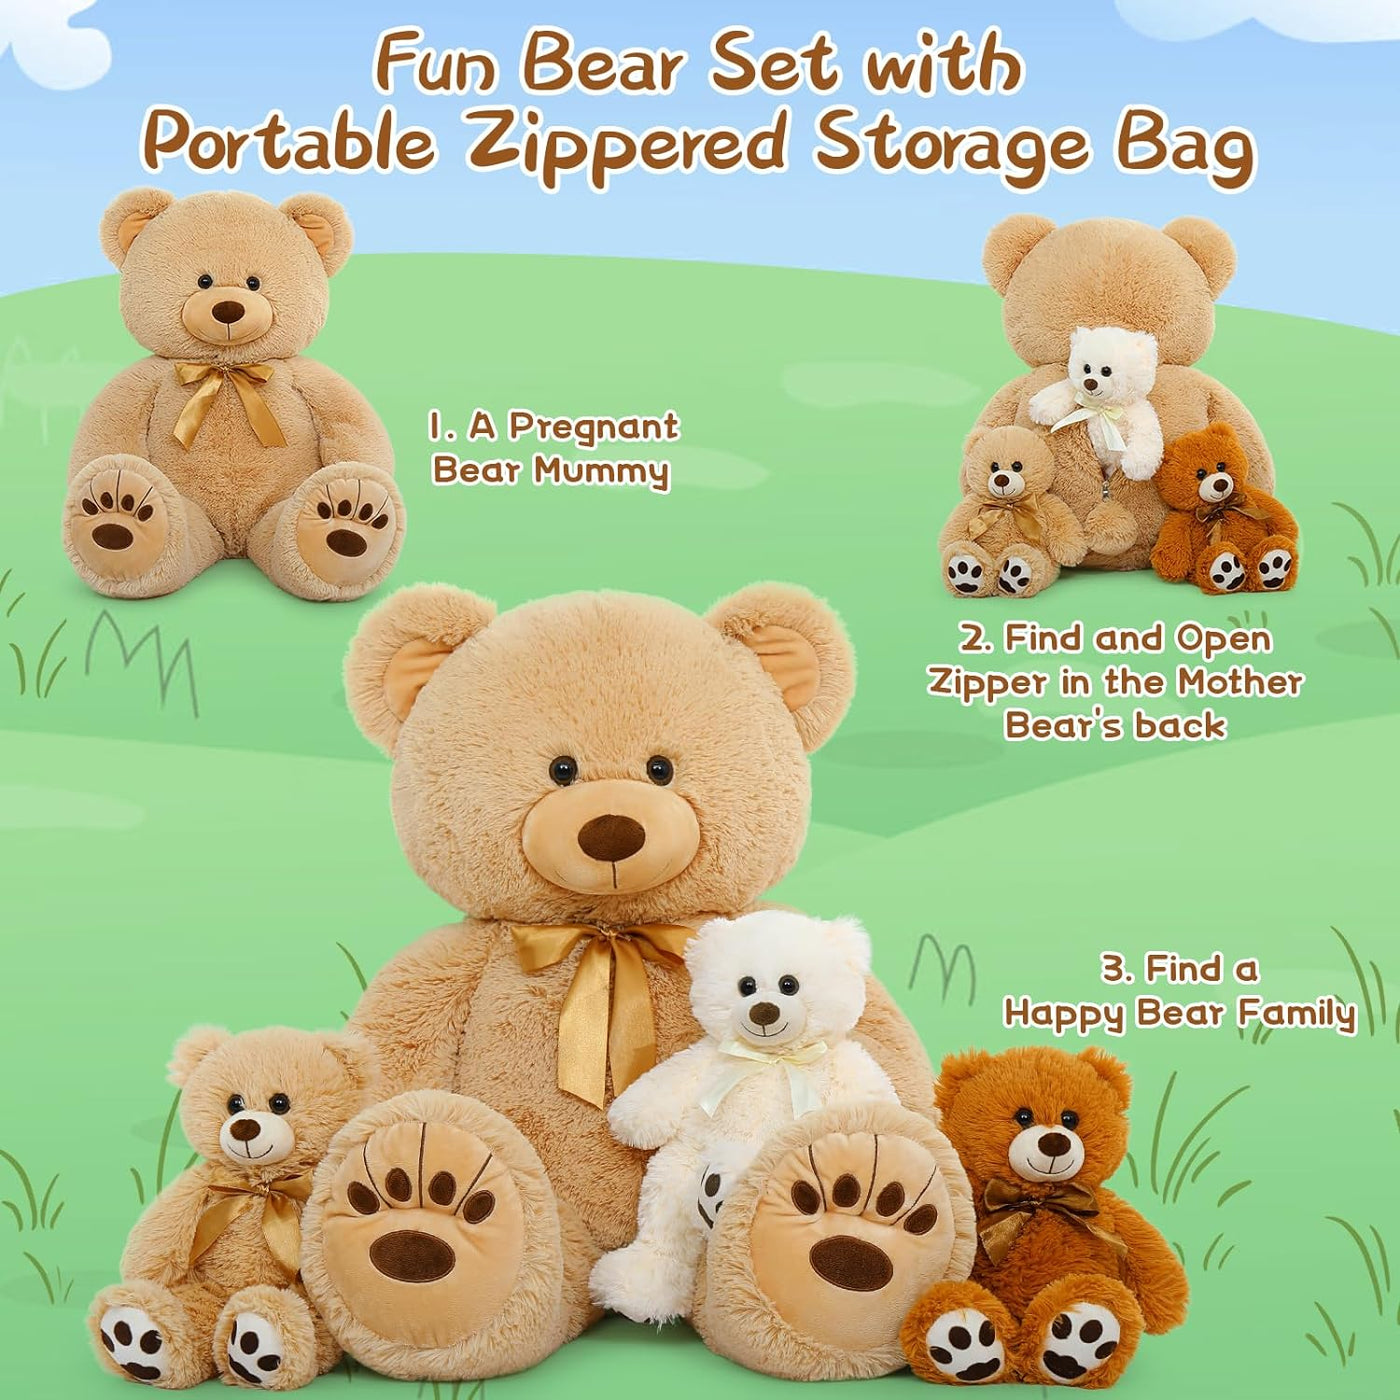 Mom Teddy Bear with Three Baby Bears, 35 Inches